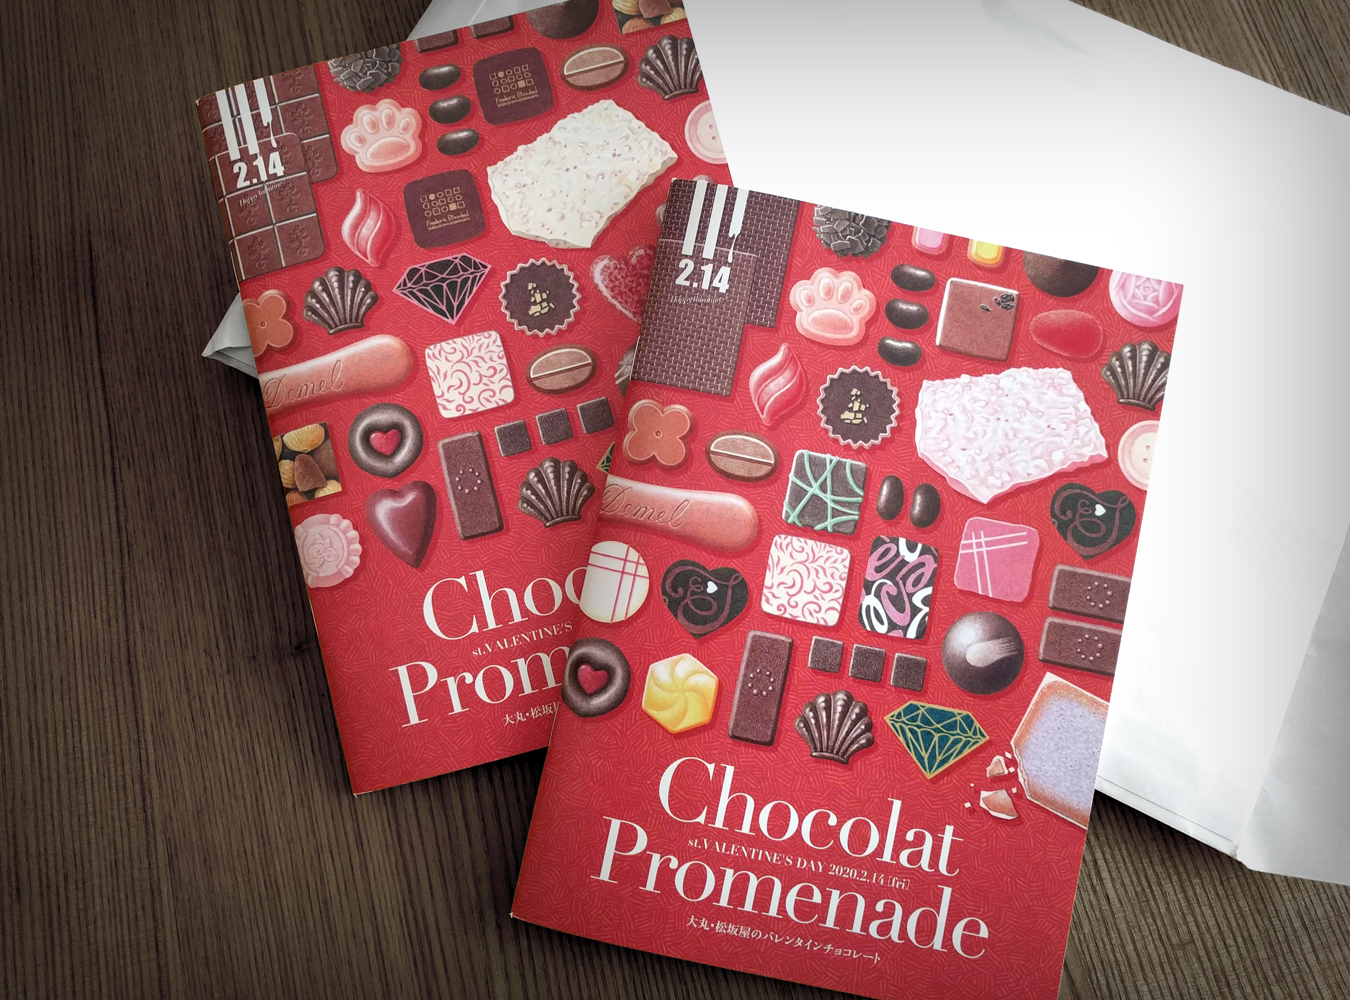 Chocolat Promenade 大丸・松坂屋のバレンタインチョコレート2020年 カタログ表紙